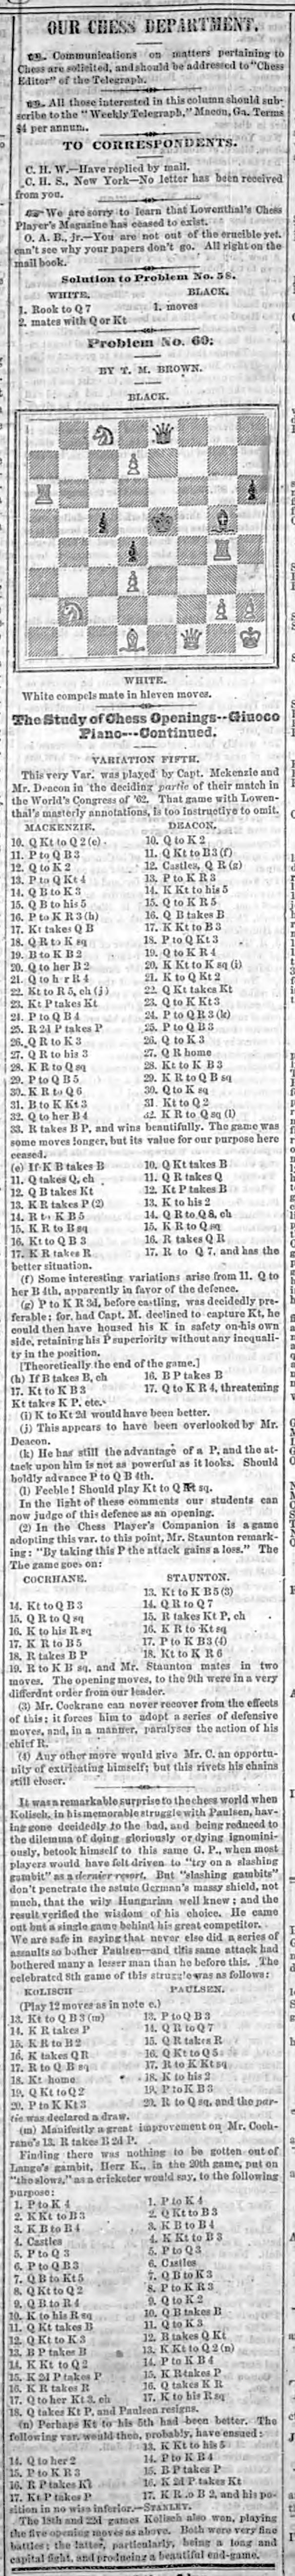 1867.11.01-01 Macon Georgia Weekly Telegraph.jpg